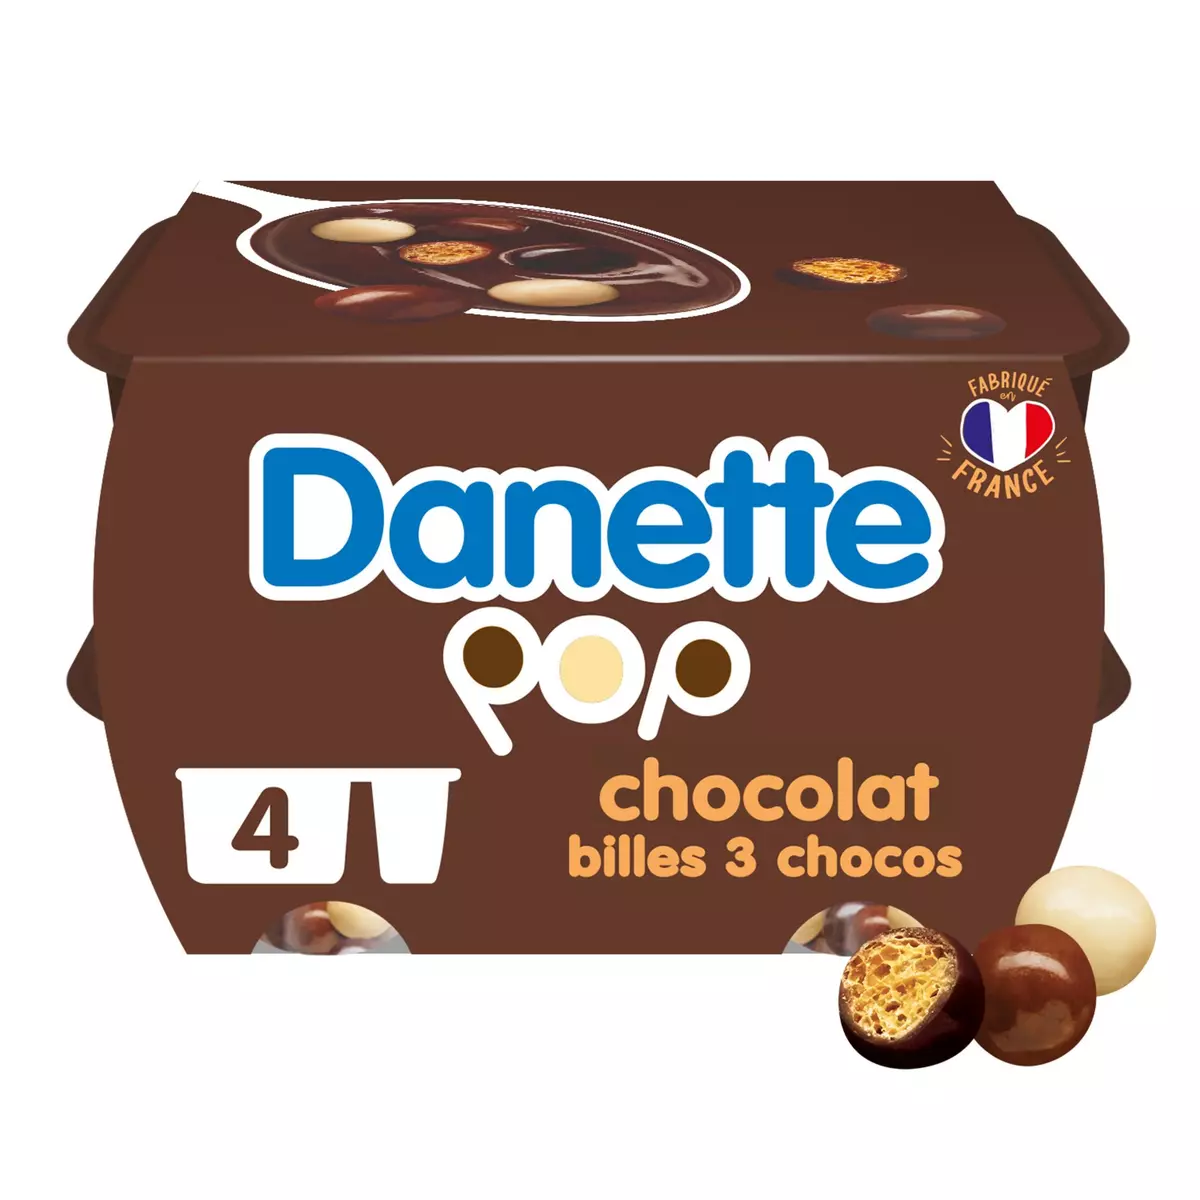 DANETTE POP X4